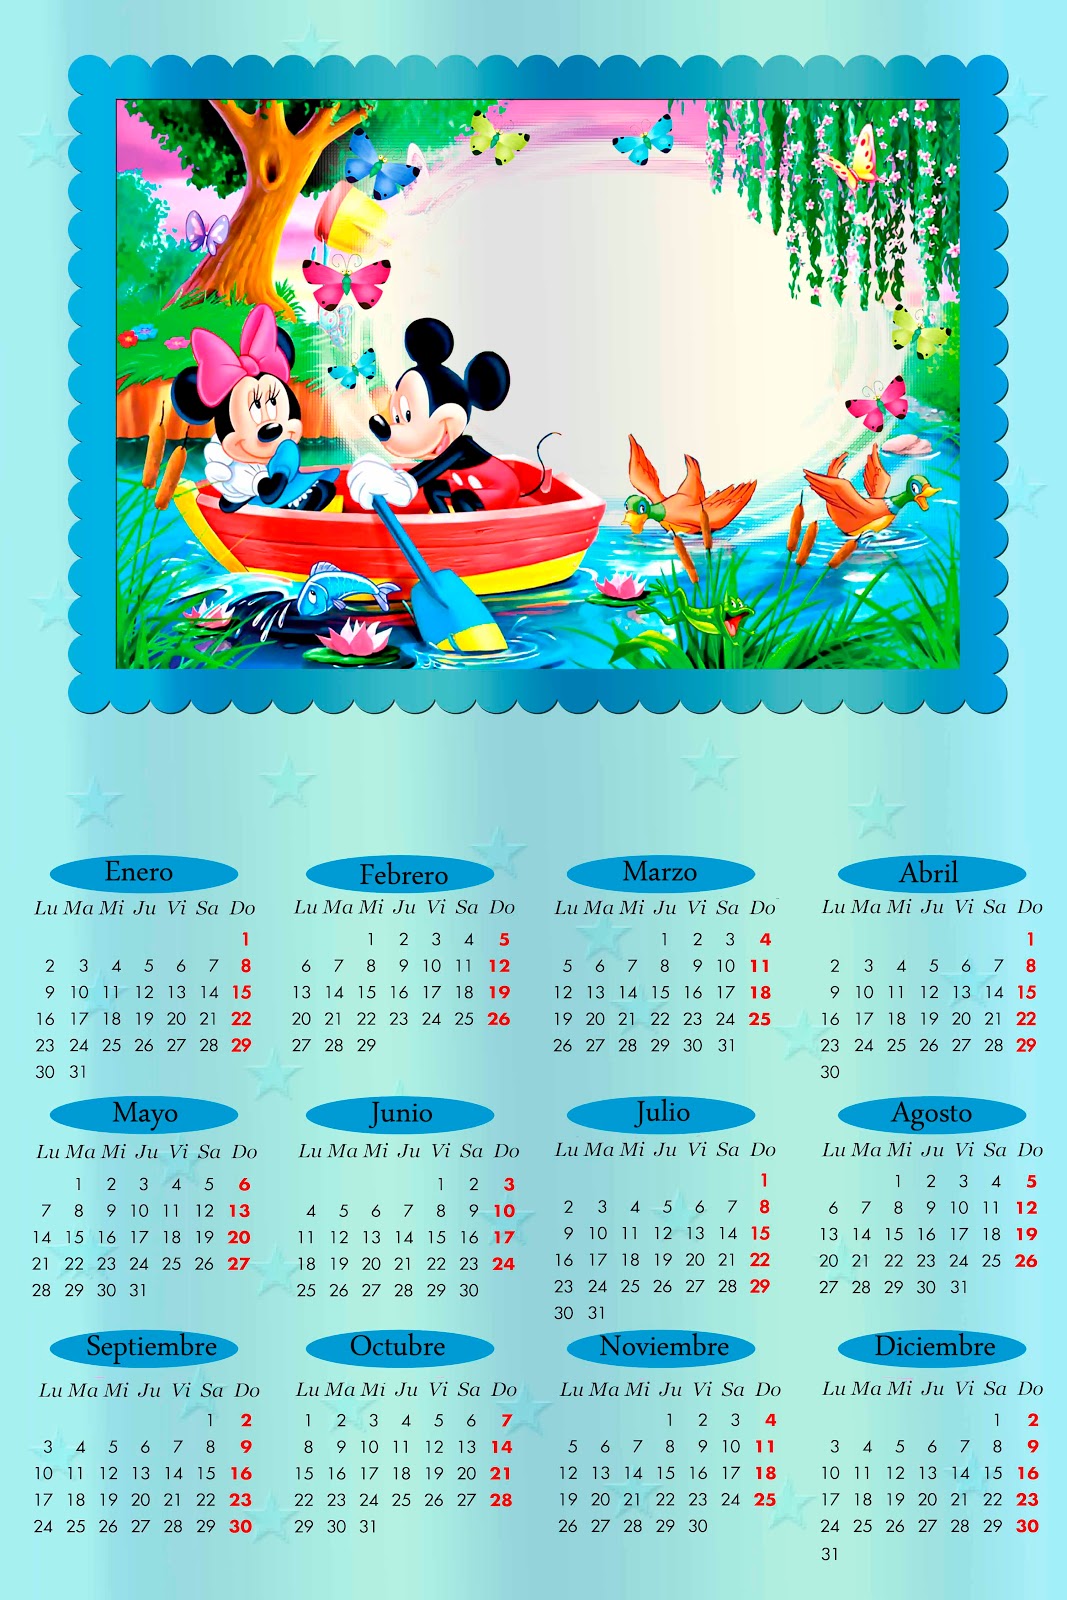 http://2.bp.blogspot.com/-Lp2rx71BKrs/TntnzRAR3oI/AAAAAAAAGN4/uxia2HDv9oQ/s1600/calendario+Mickey.jpg